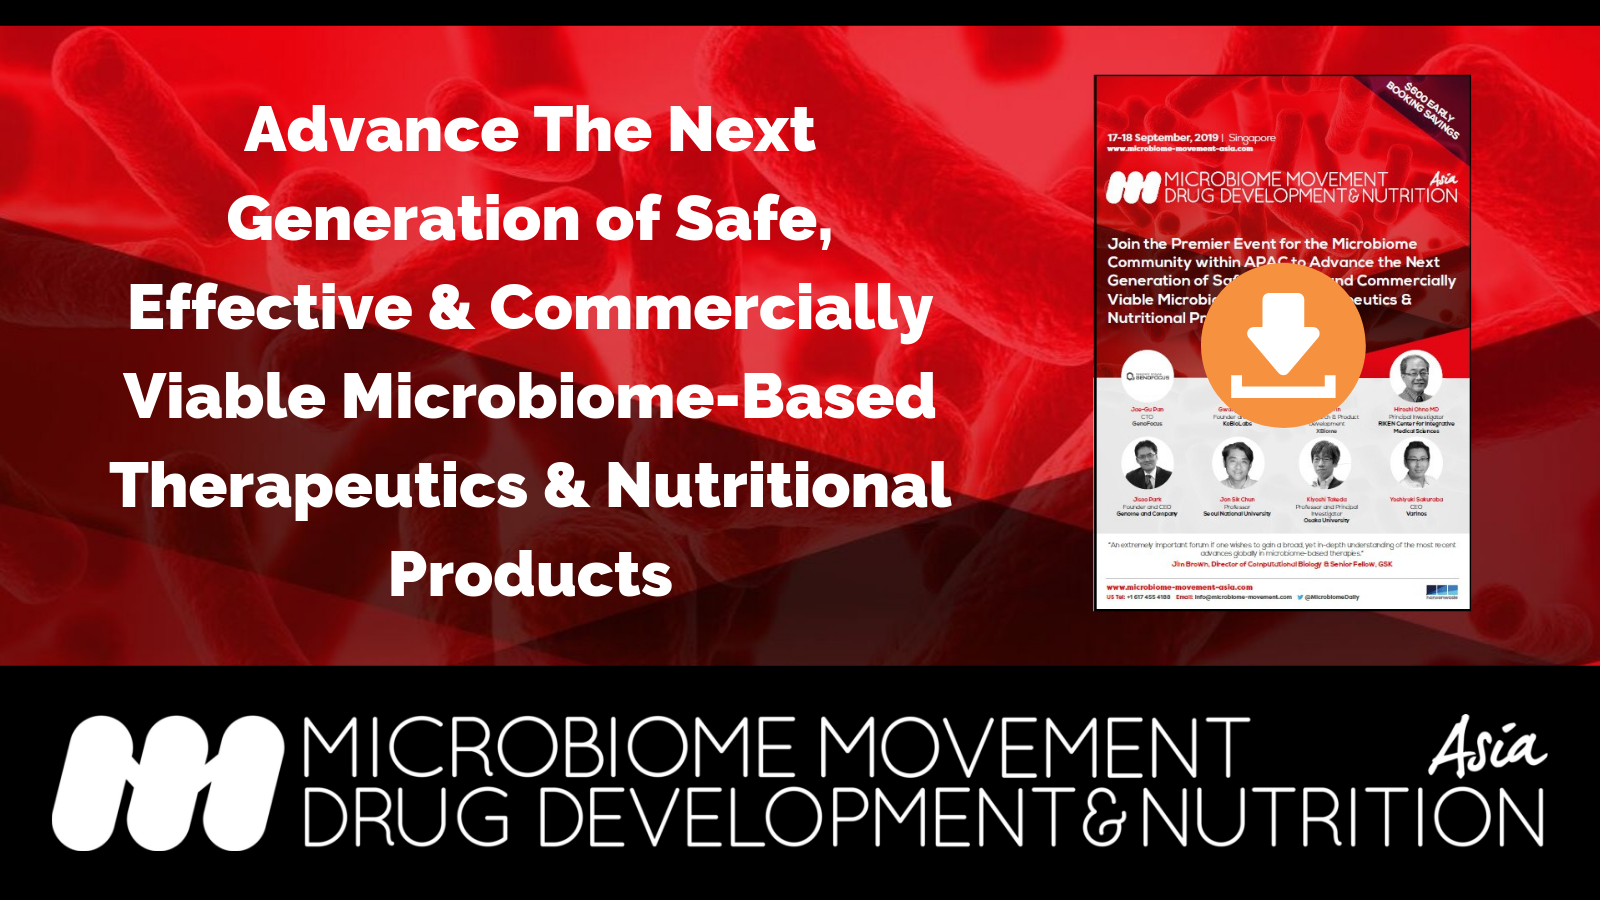 Microbiome Movement - Drug Development Asia